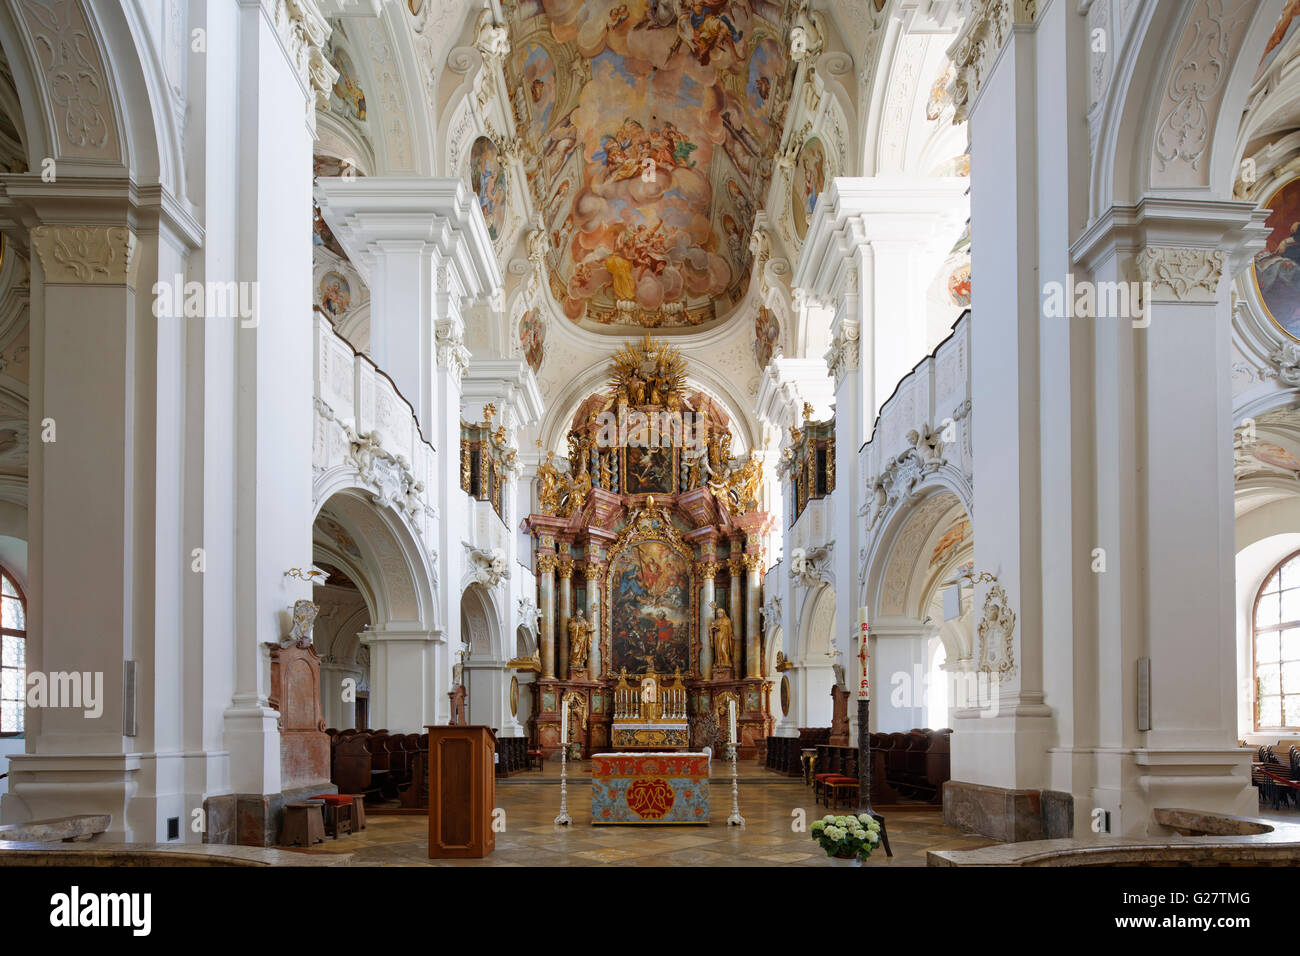 Presbytery, choir room with high altar, Abbey Church St. Mauritius, Niederaltaich Monastery, Lower Bavaria, Bavaria, Germany Stock Photo